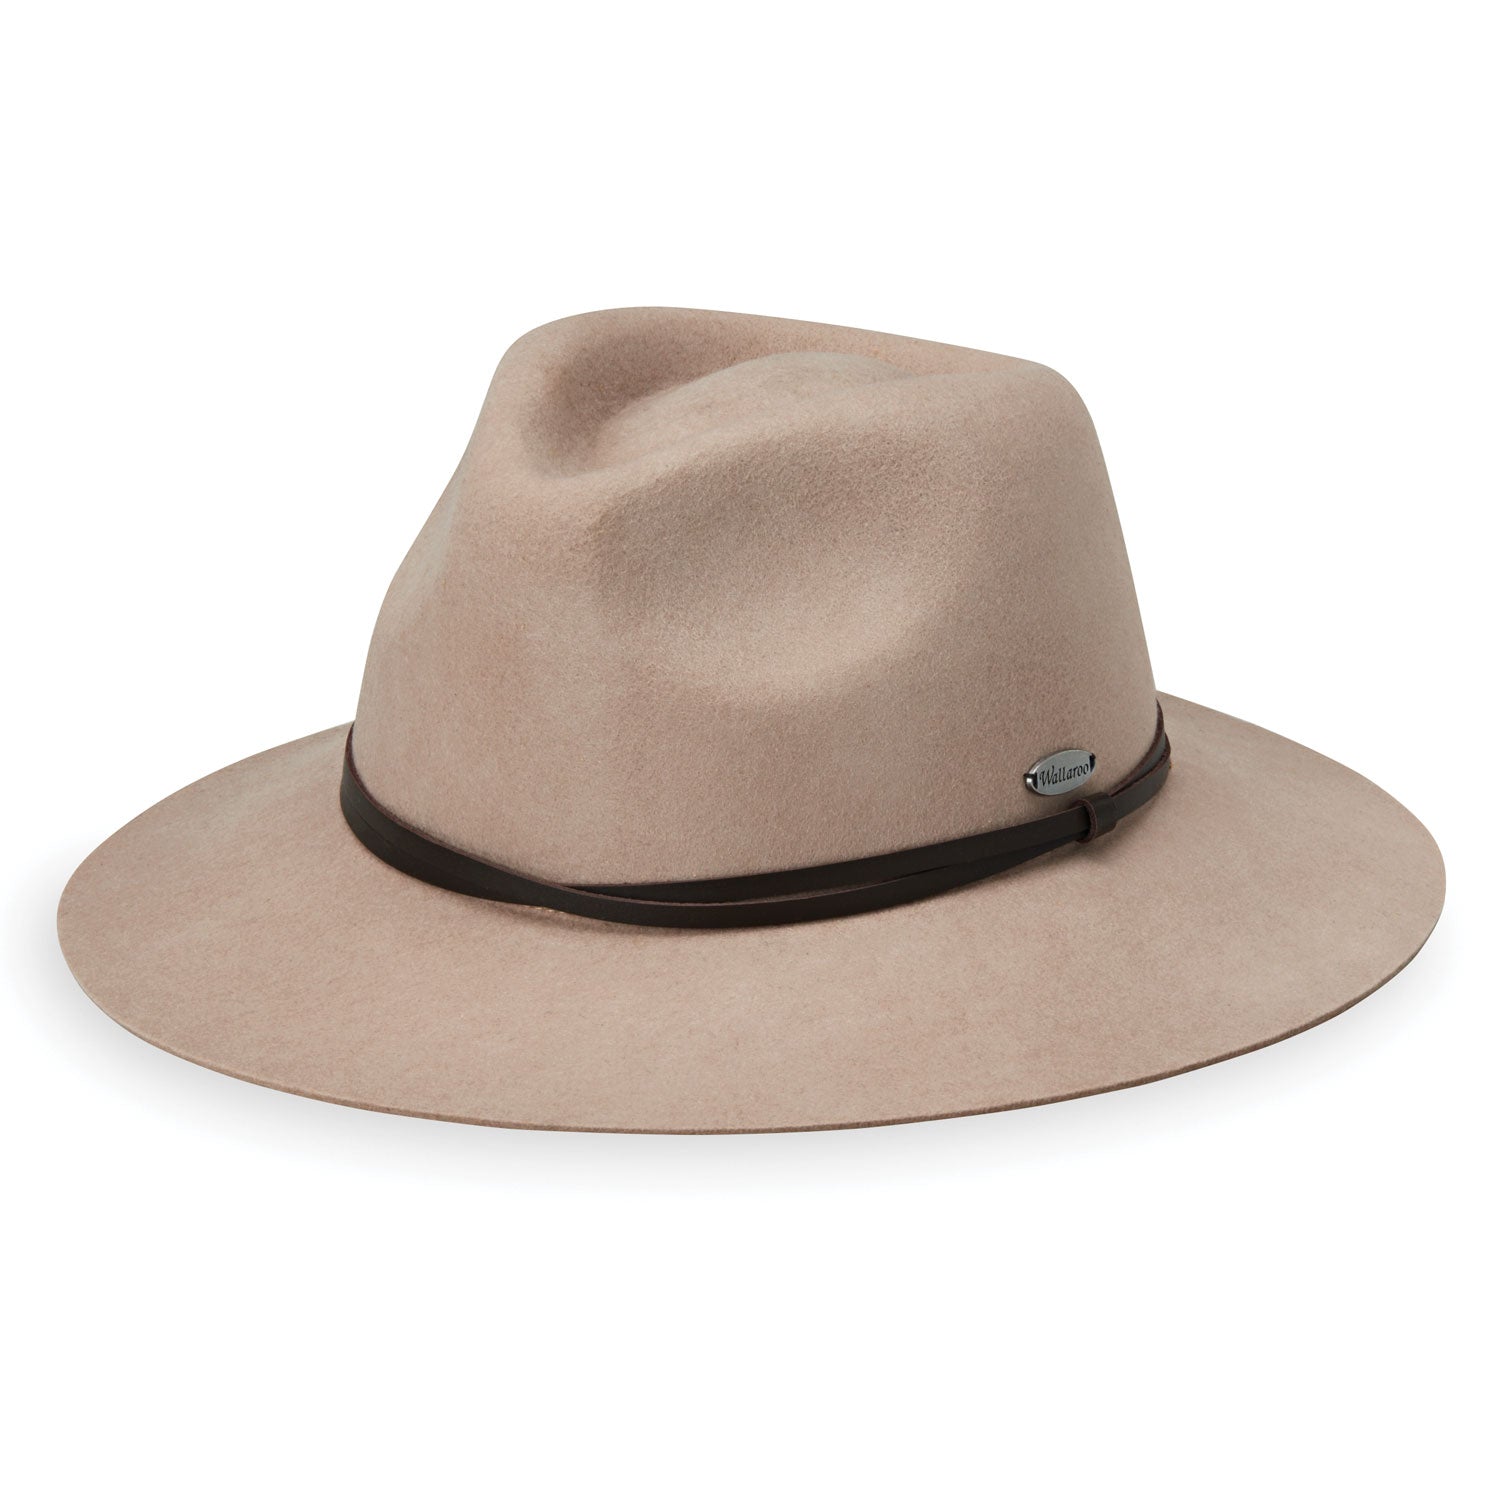 Aspen Hat - Taupe